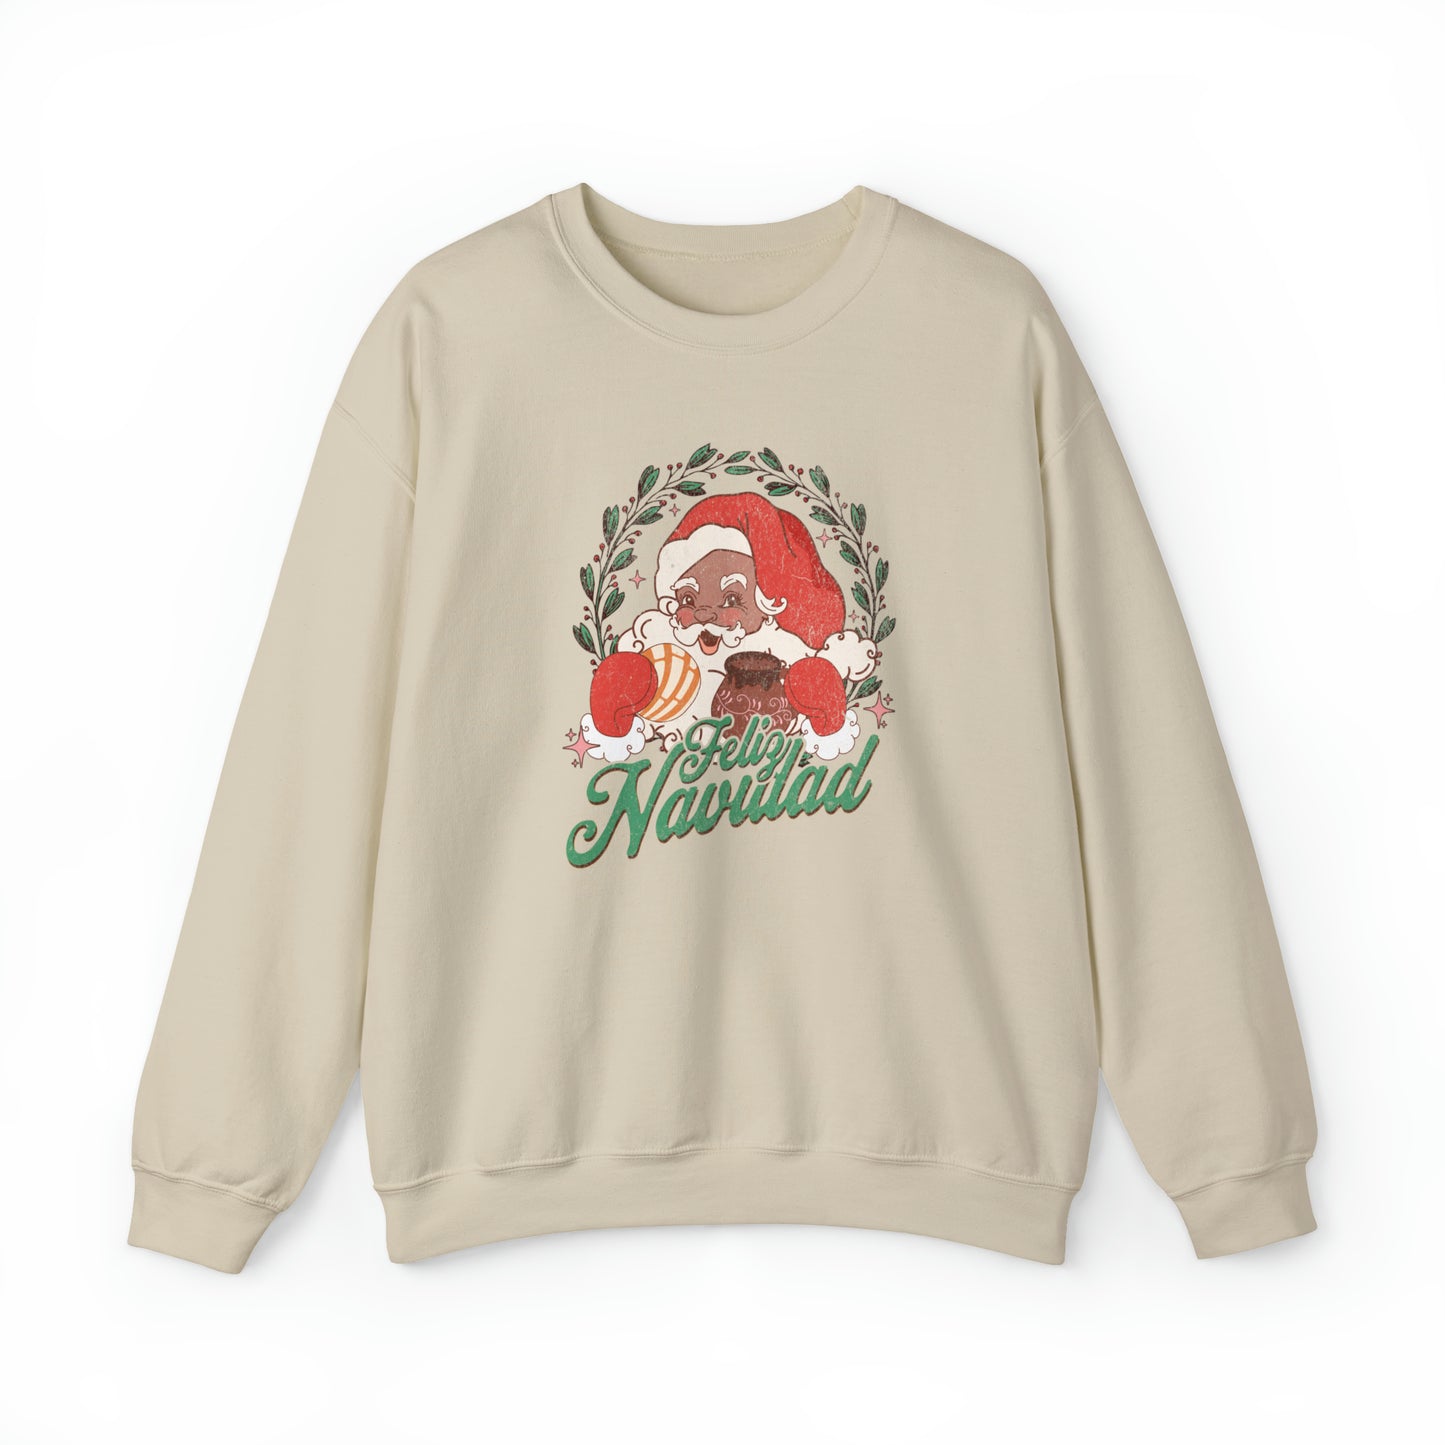 Feliz navidad  Heavy Blend Crewneck Sweatshirt for him or her. Santa Claus eating concha and drinking cafecito.